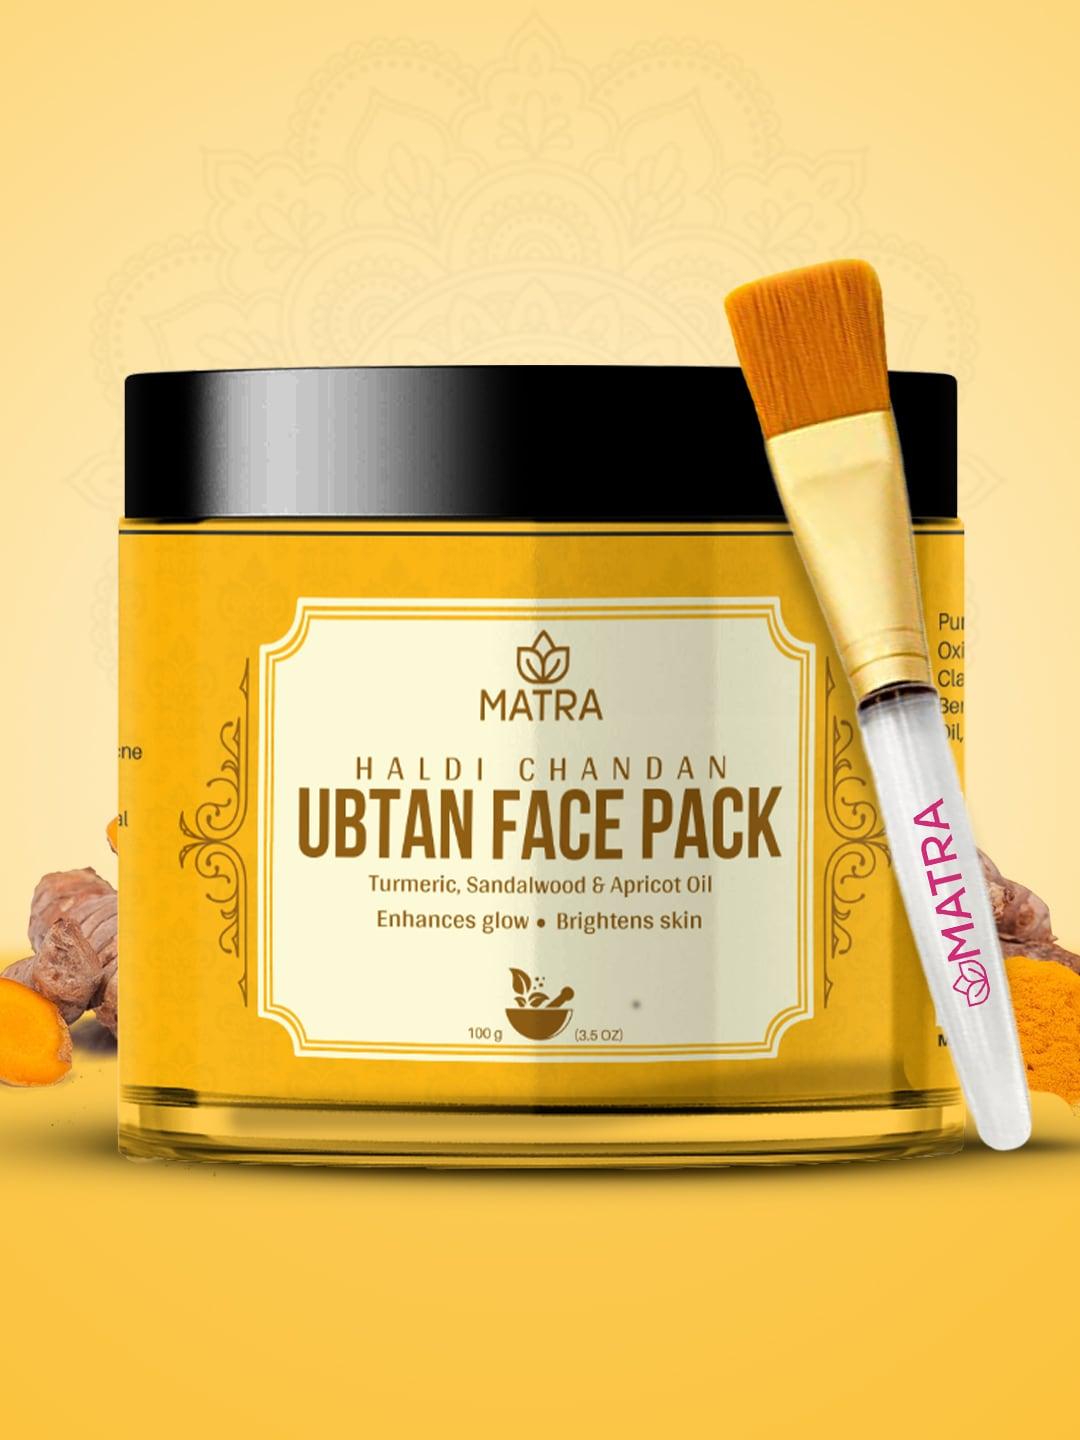 MATRA Haldi Chandan Ubtan Face Pack with Face Mask Brush - 100 g